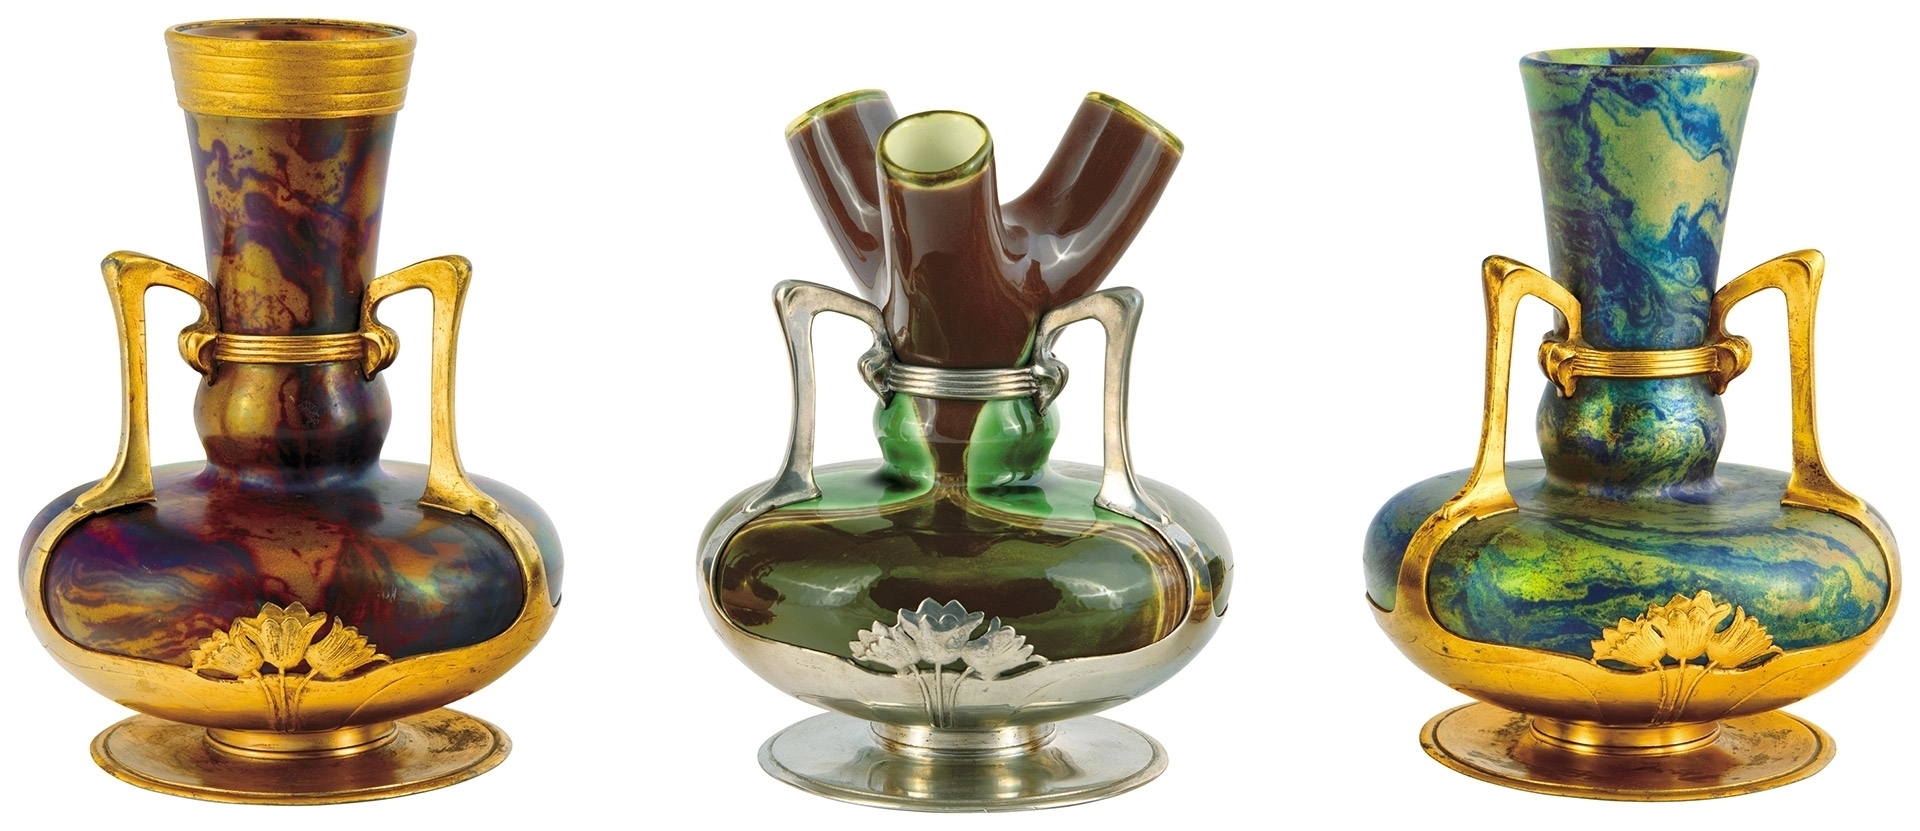 Zsolnay Ensemble; three Decor Vases in Metal Mounting, Zsolnay/Osiris,1904